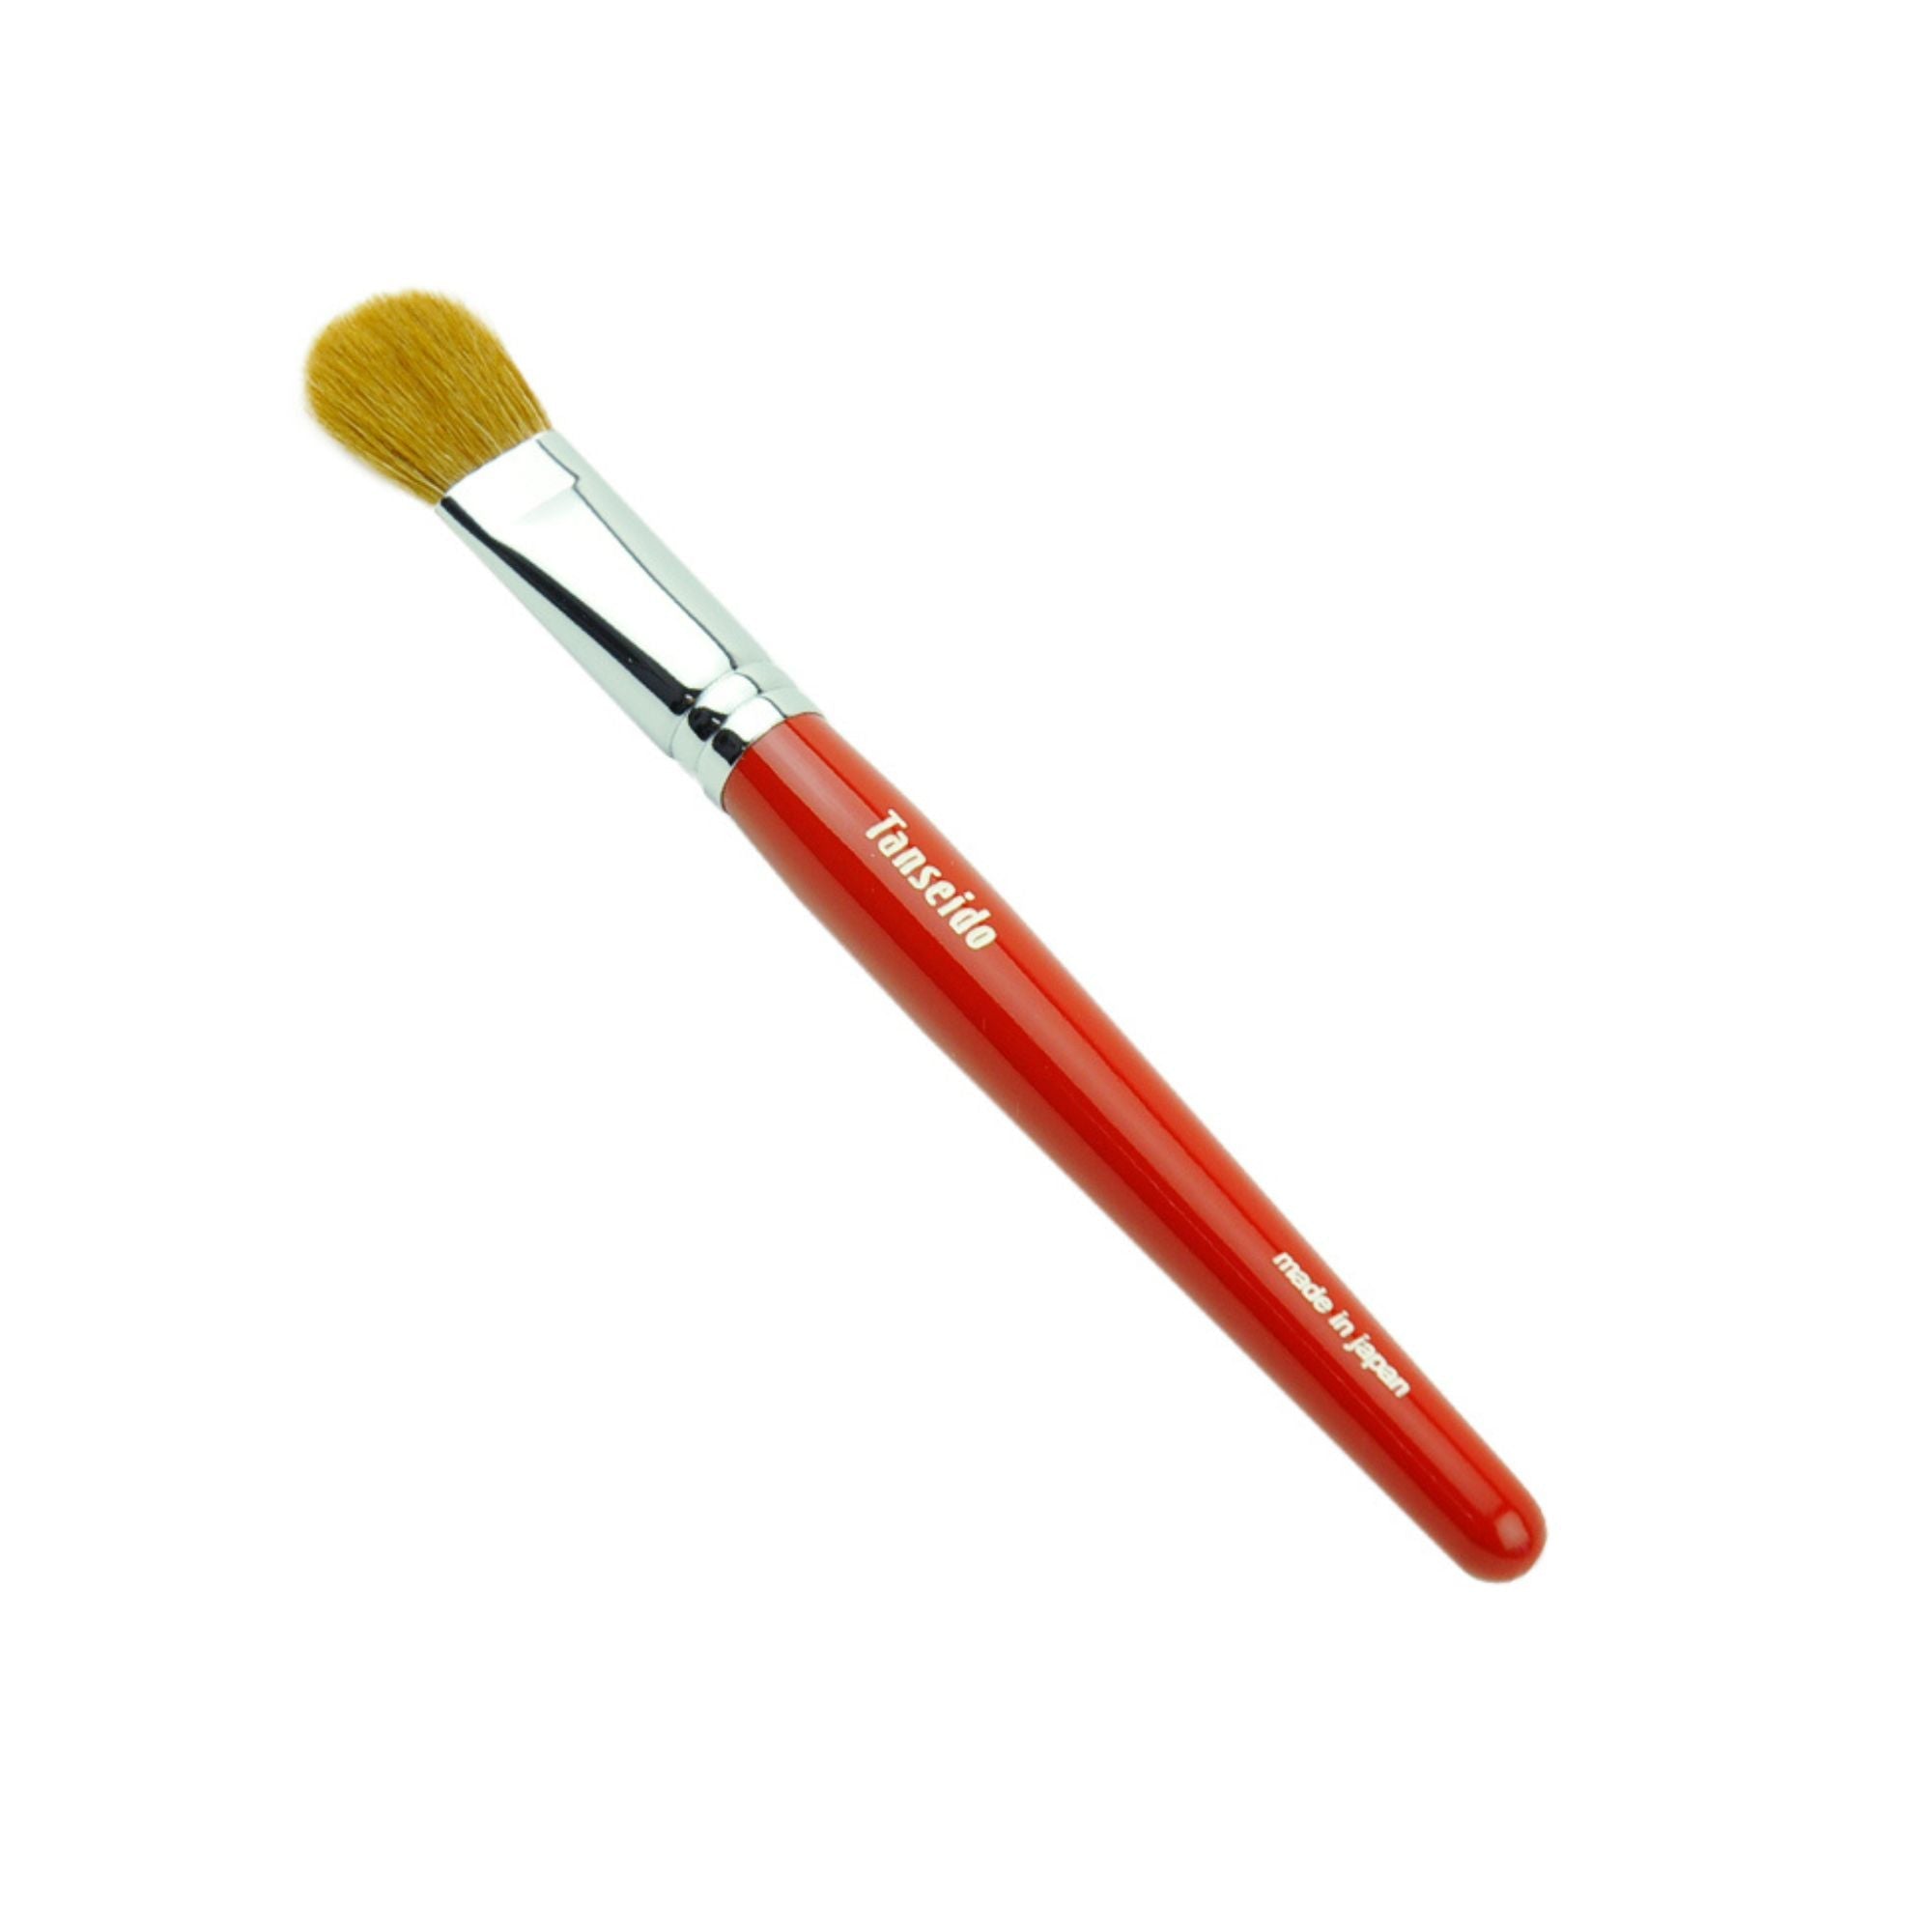 Tanseido Eyeshadow Brush WQ12T - Fude Beauty, Japanese Makeup Brushes